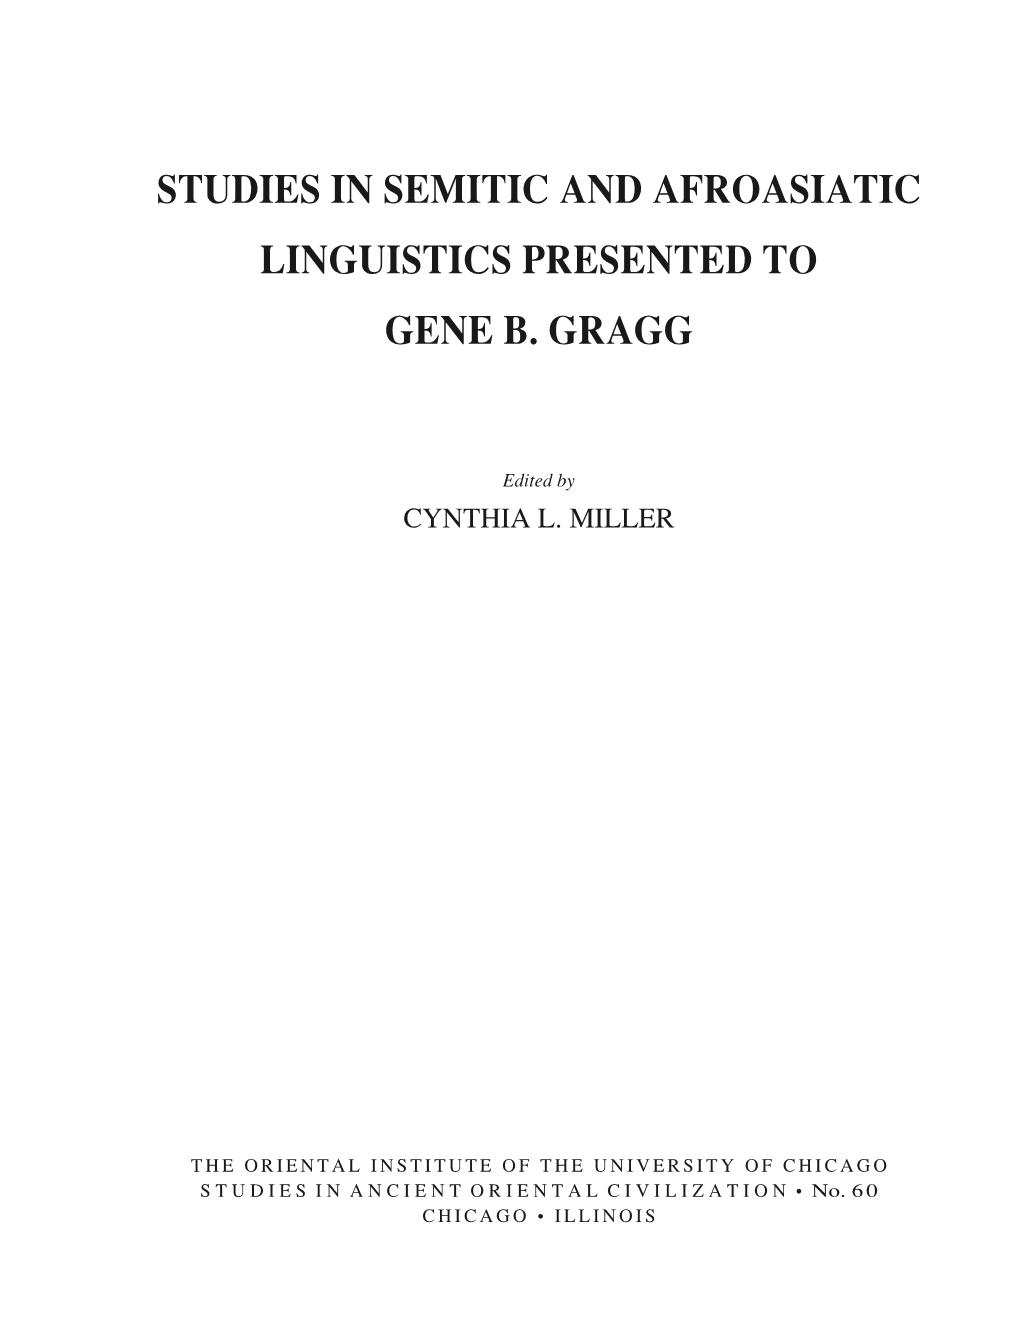 Studies in Semitic and Afroasiatic Linguistics Presented to Gene B